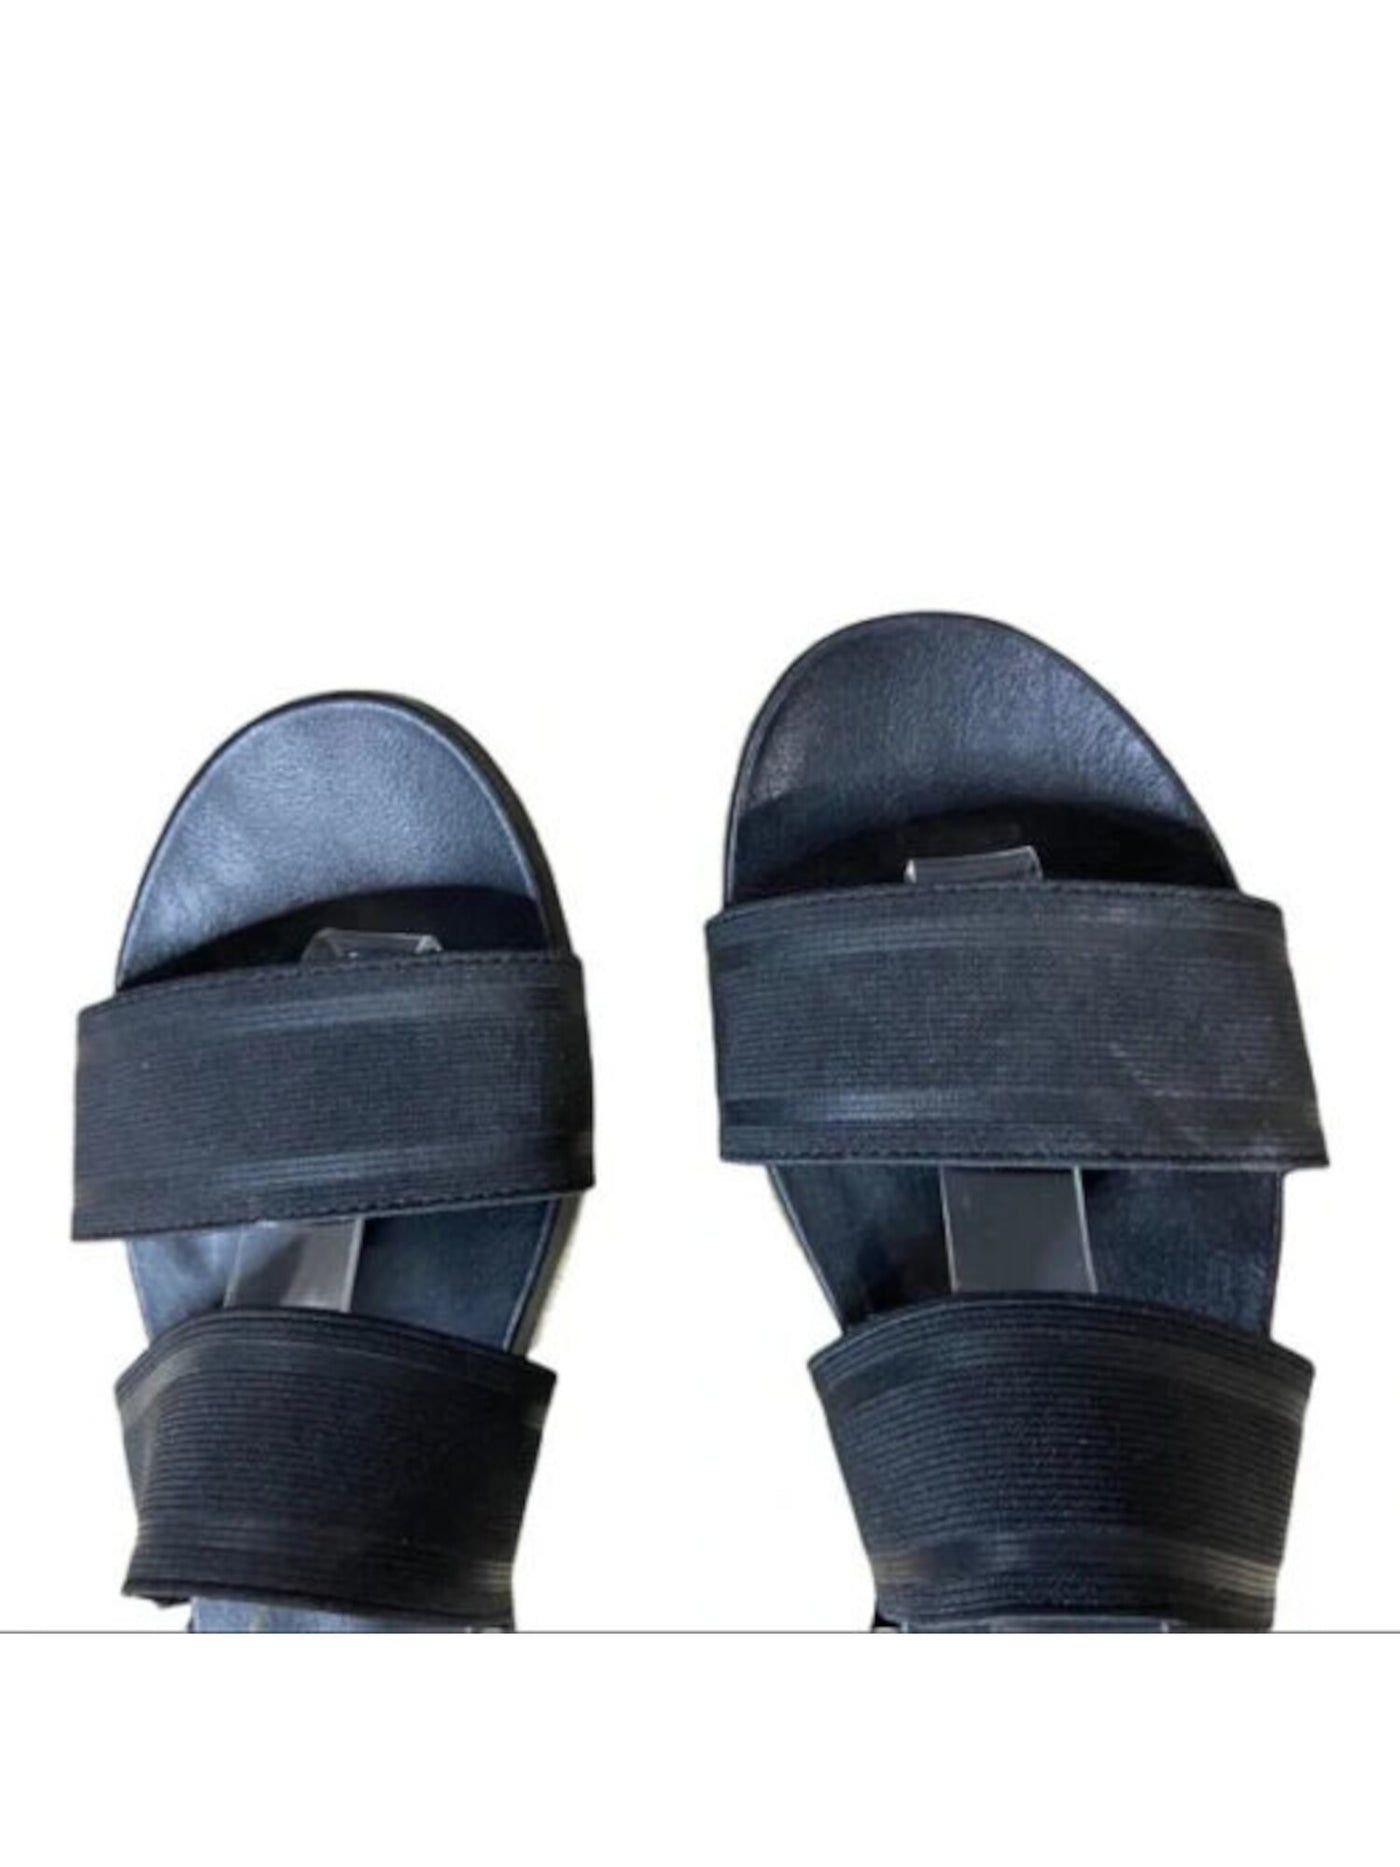 J/SLIDES Womens Black Treaded Sole 2" Platform Ankle Strap Stretch Quartz Round Toe Wedge Slip On Leather Espadrille Shoes 8.5 M